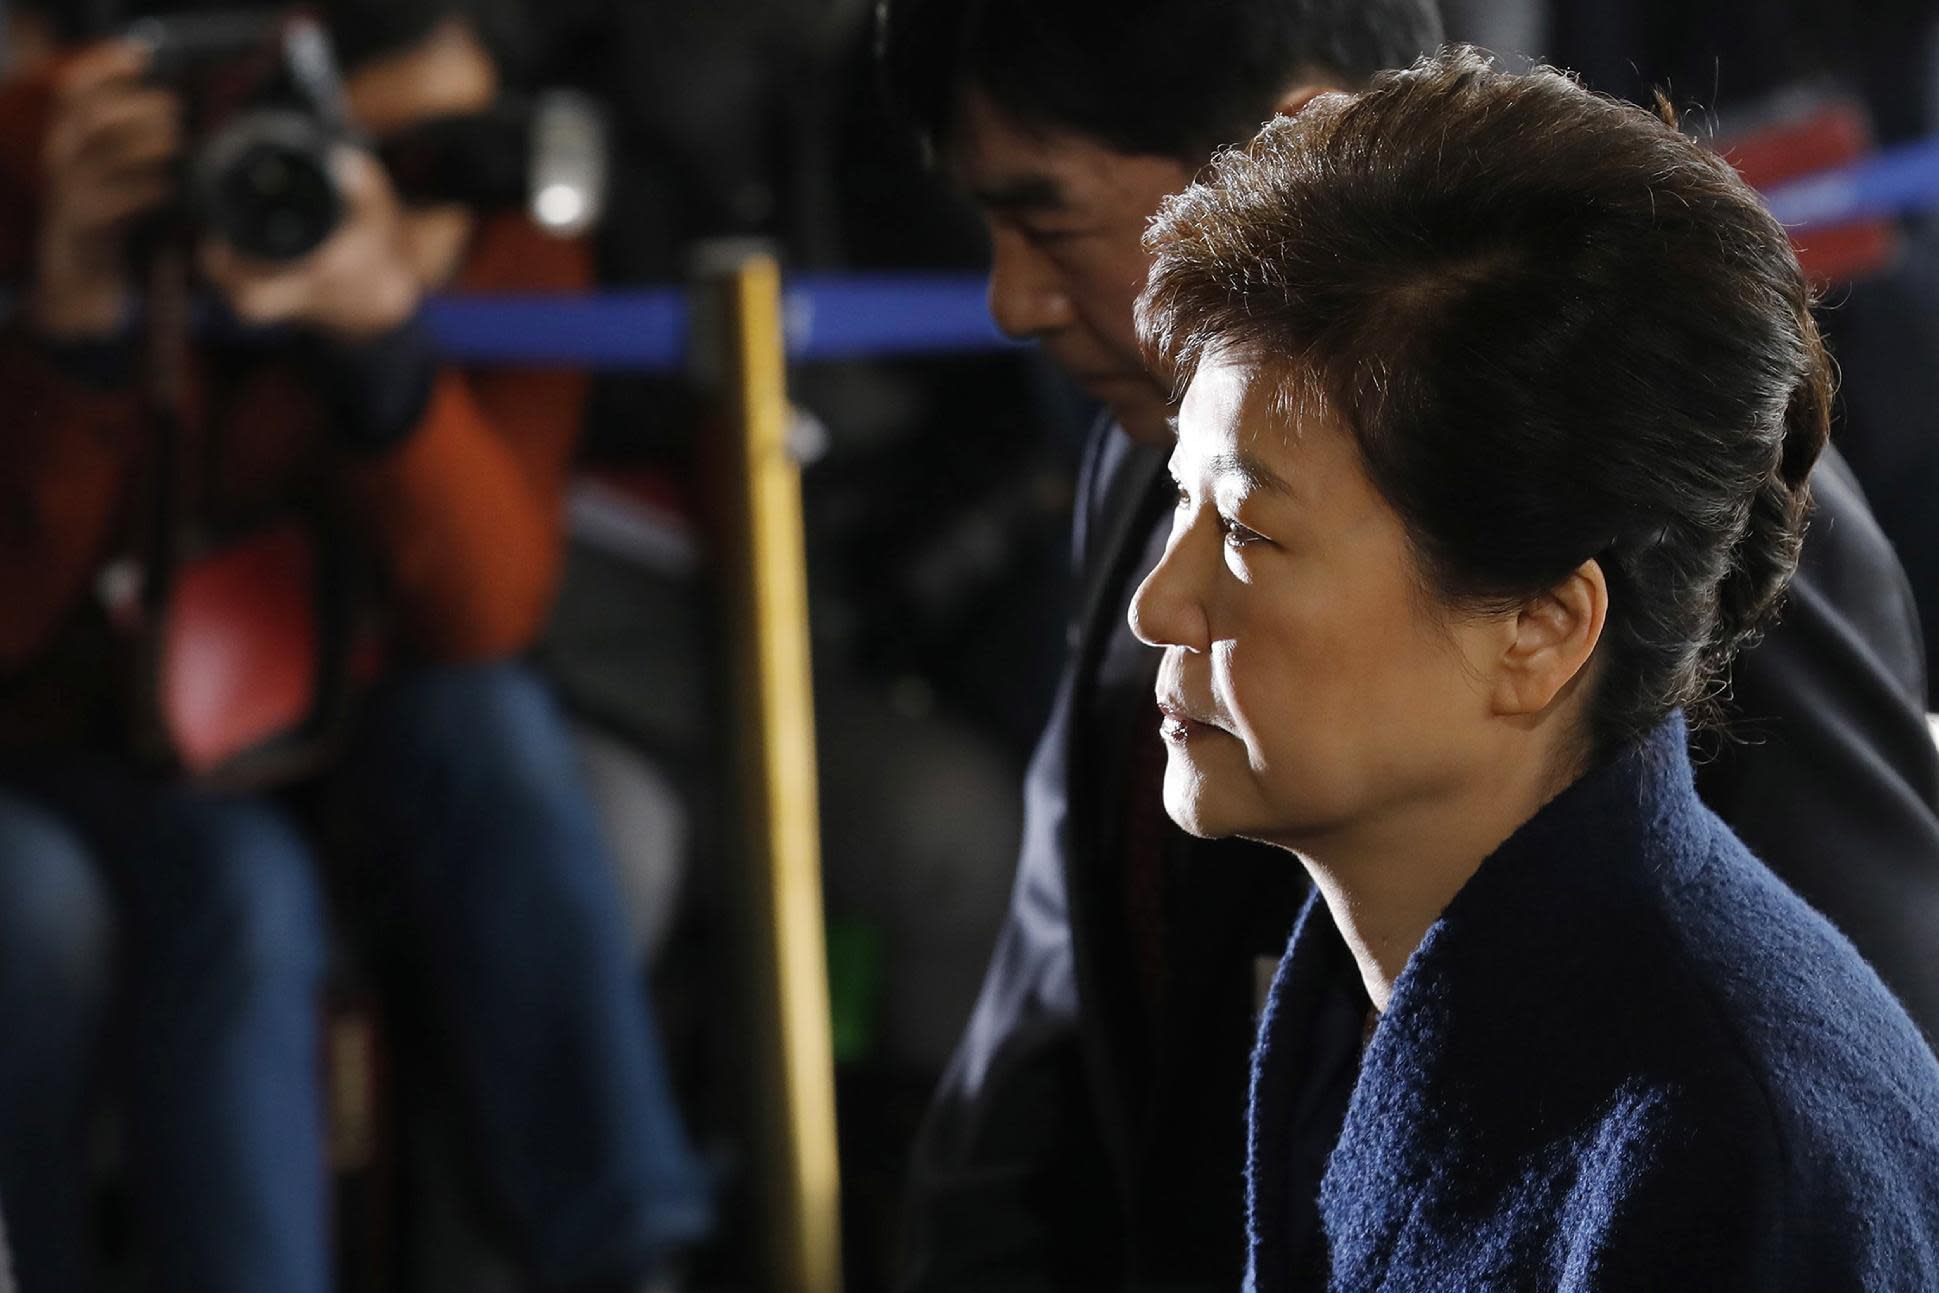 S. Korea prosecutors grill Park over corruption allegations